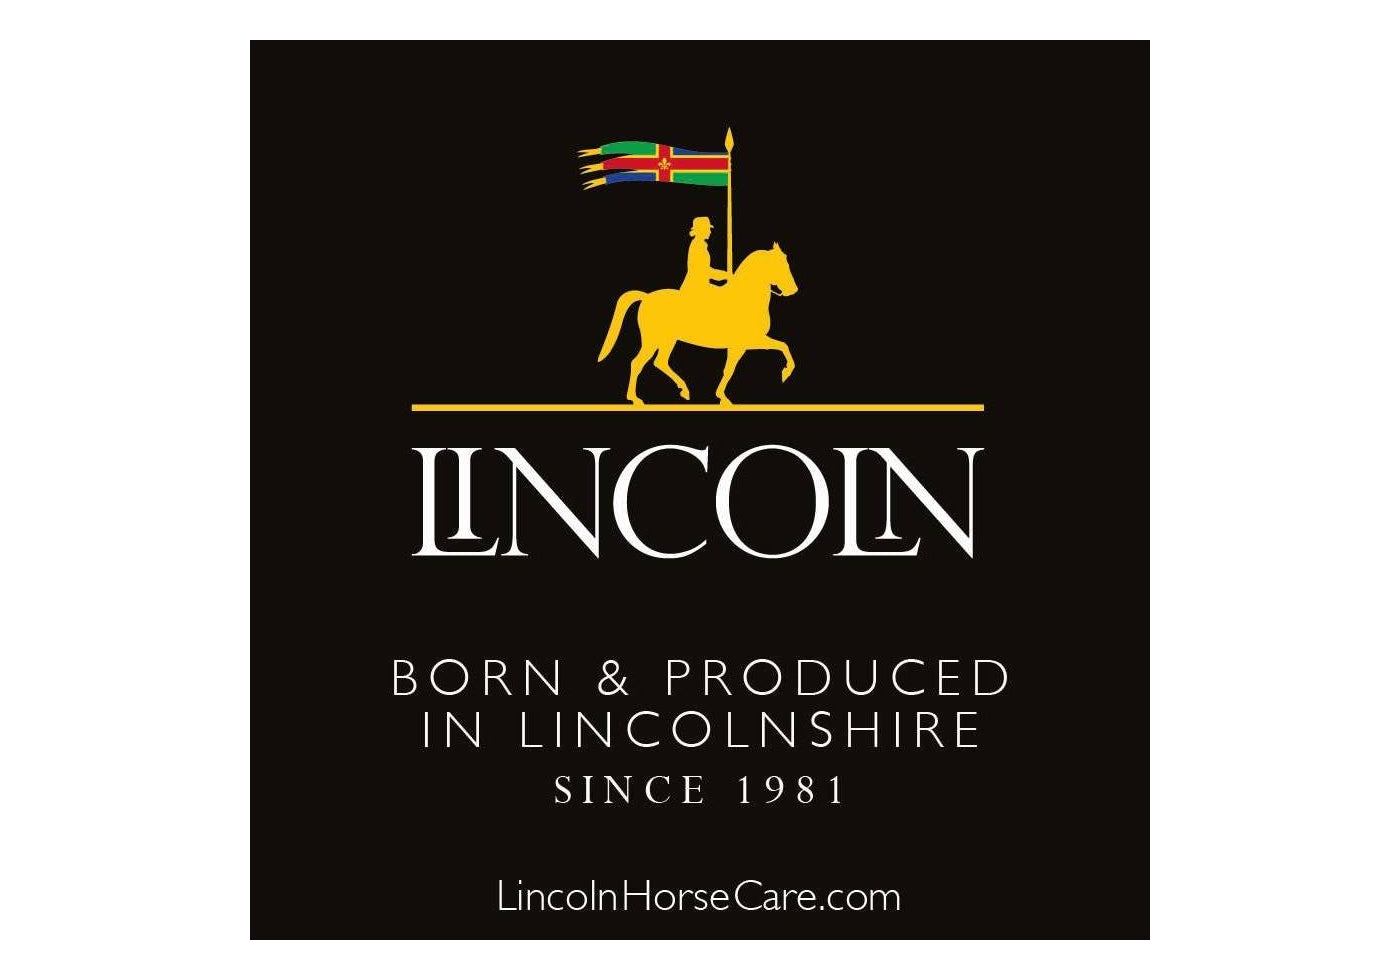 Lincoln Classic Fly Repellent Liquid 1L | Horse Care - Buy Online SPR Centre UK